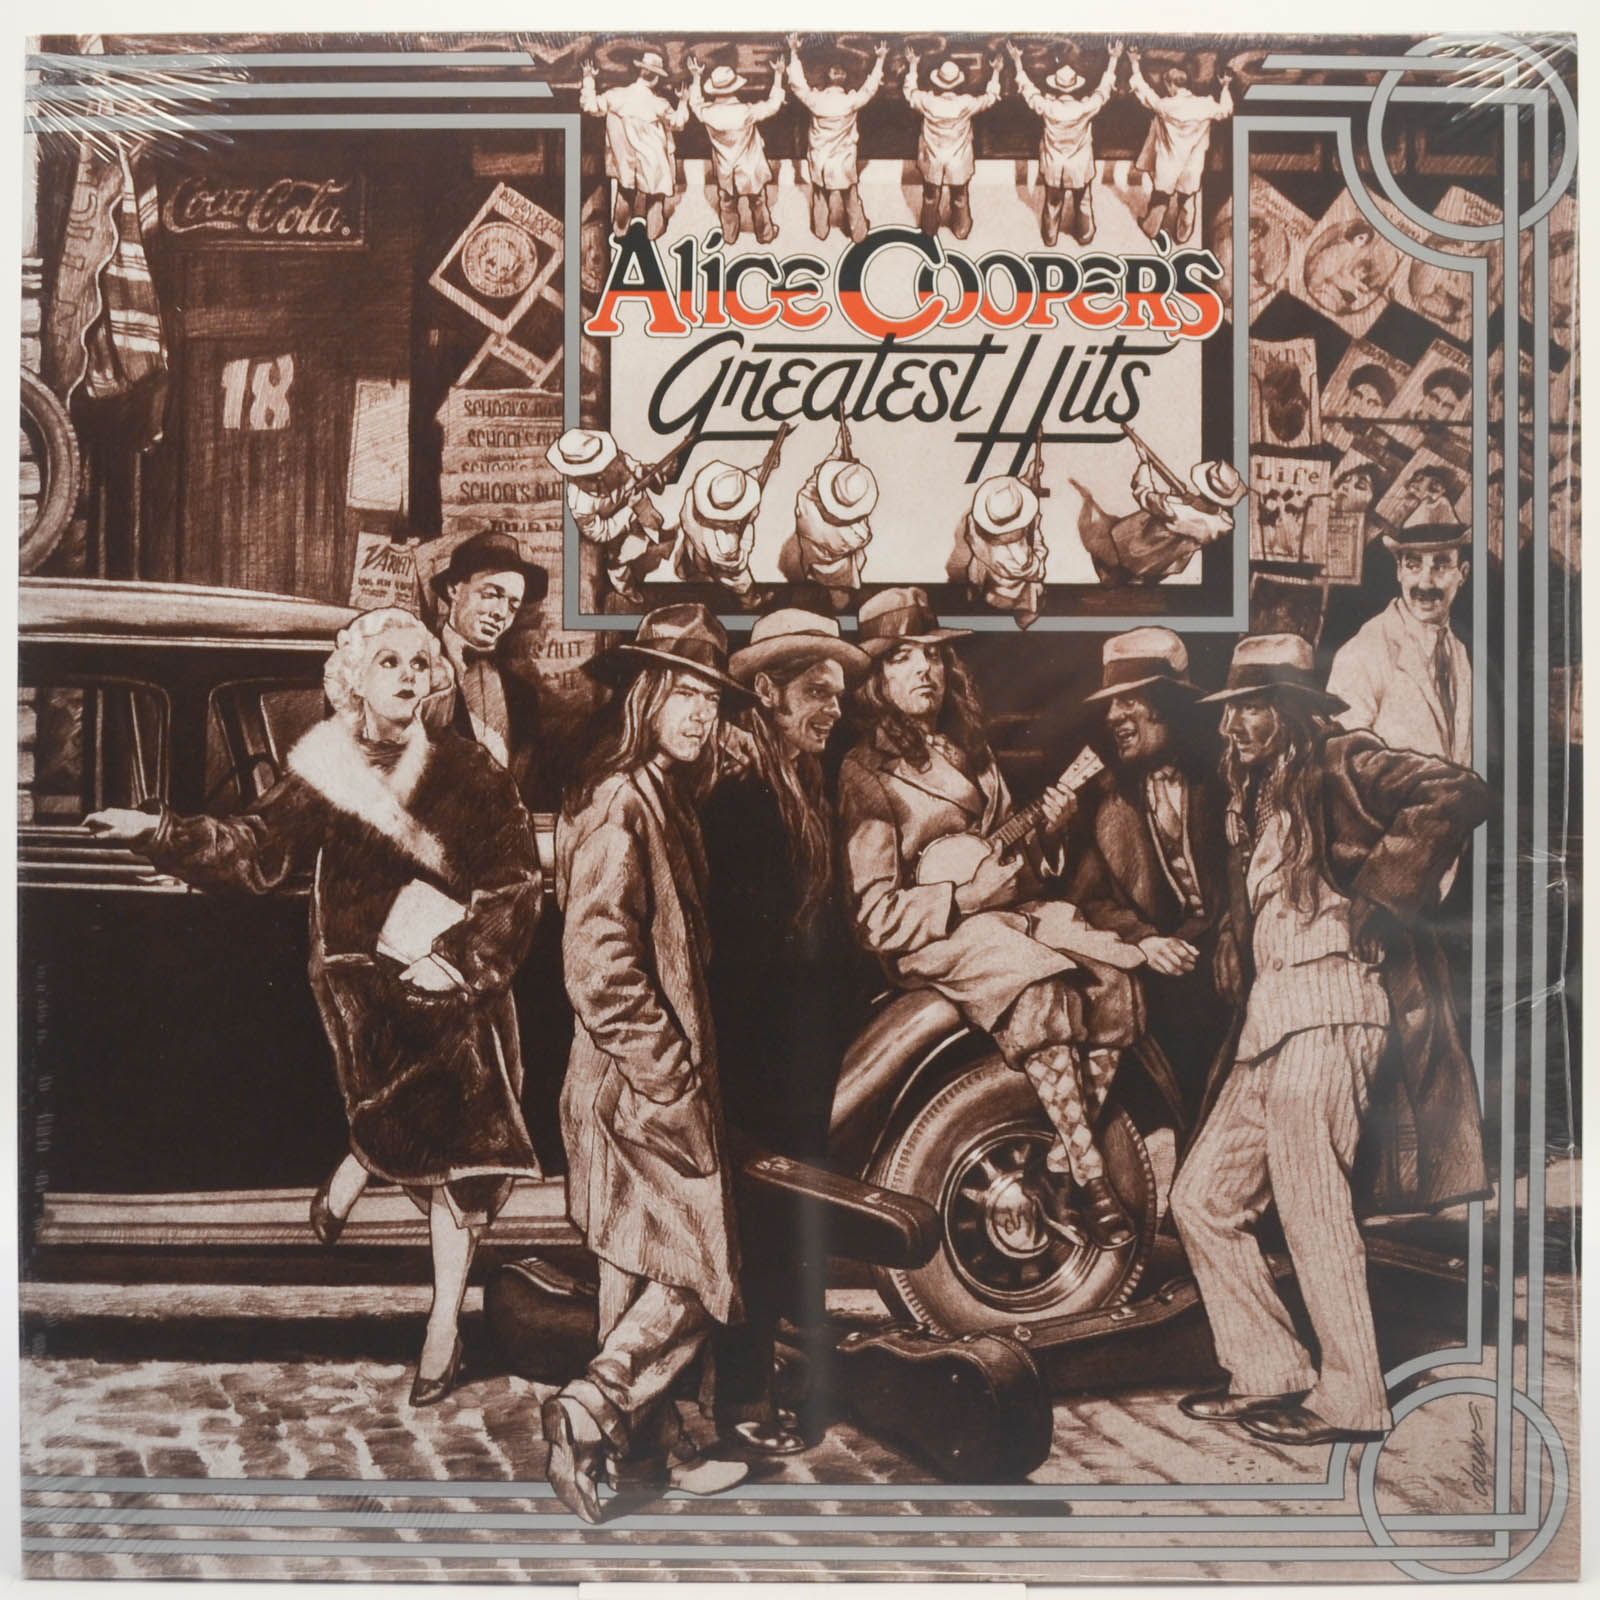 Alice Cooper — Alice Cooper's Greatest Hits, 1974